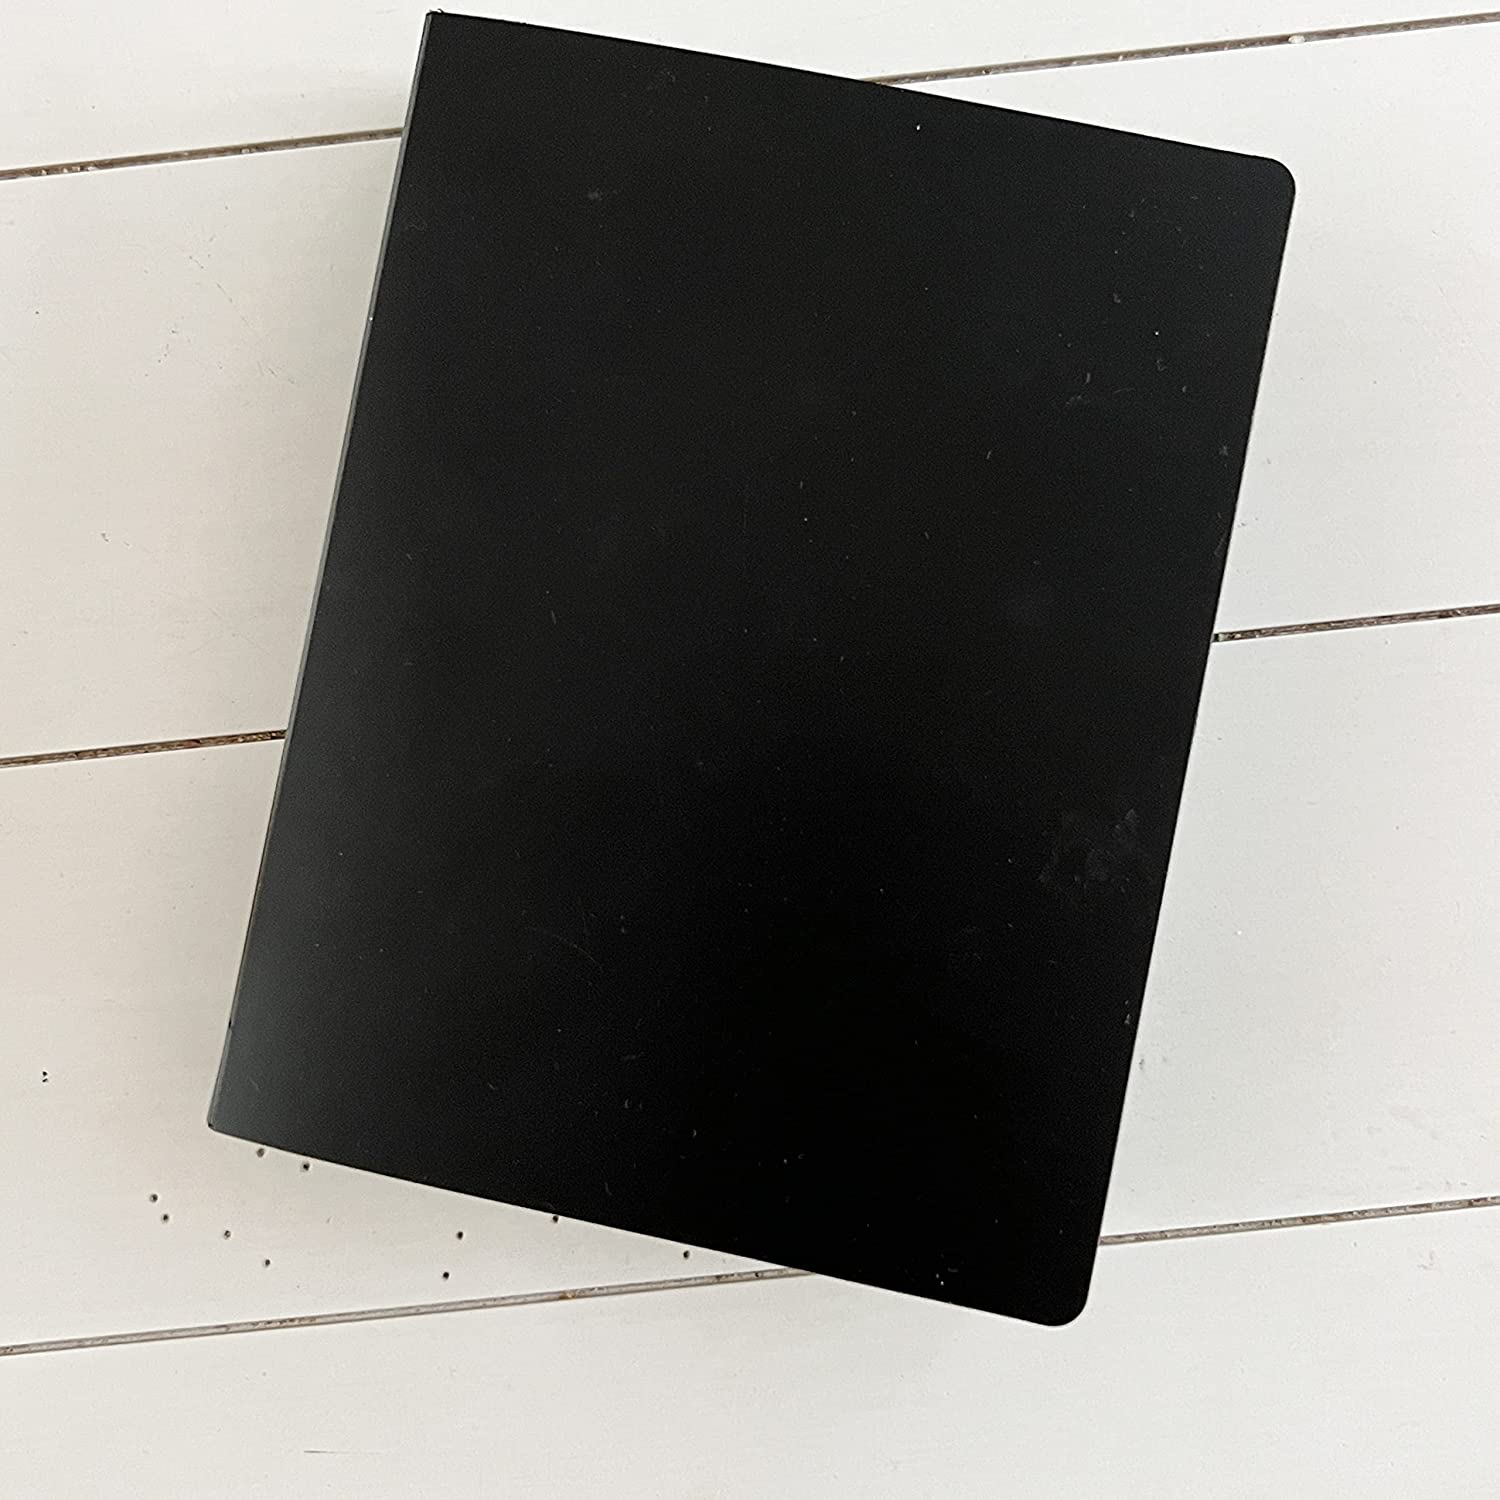 Photo Booth Album - Easy Slide in 4x6 Plastic Slots - Holds 140 Photos -  Storage Box Included 4x6 Photo Album - Black